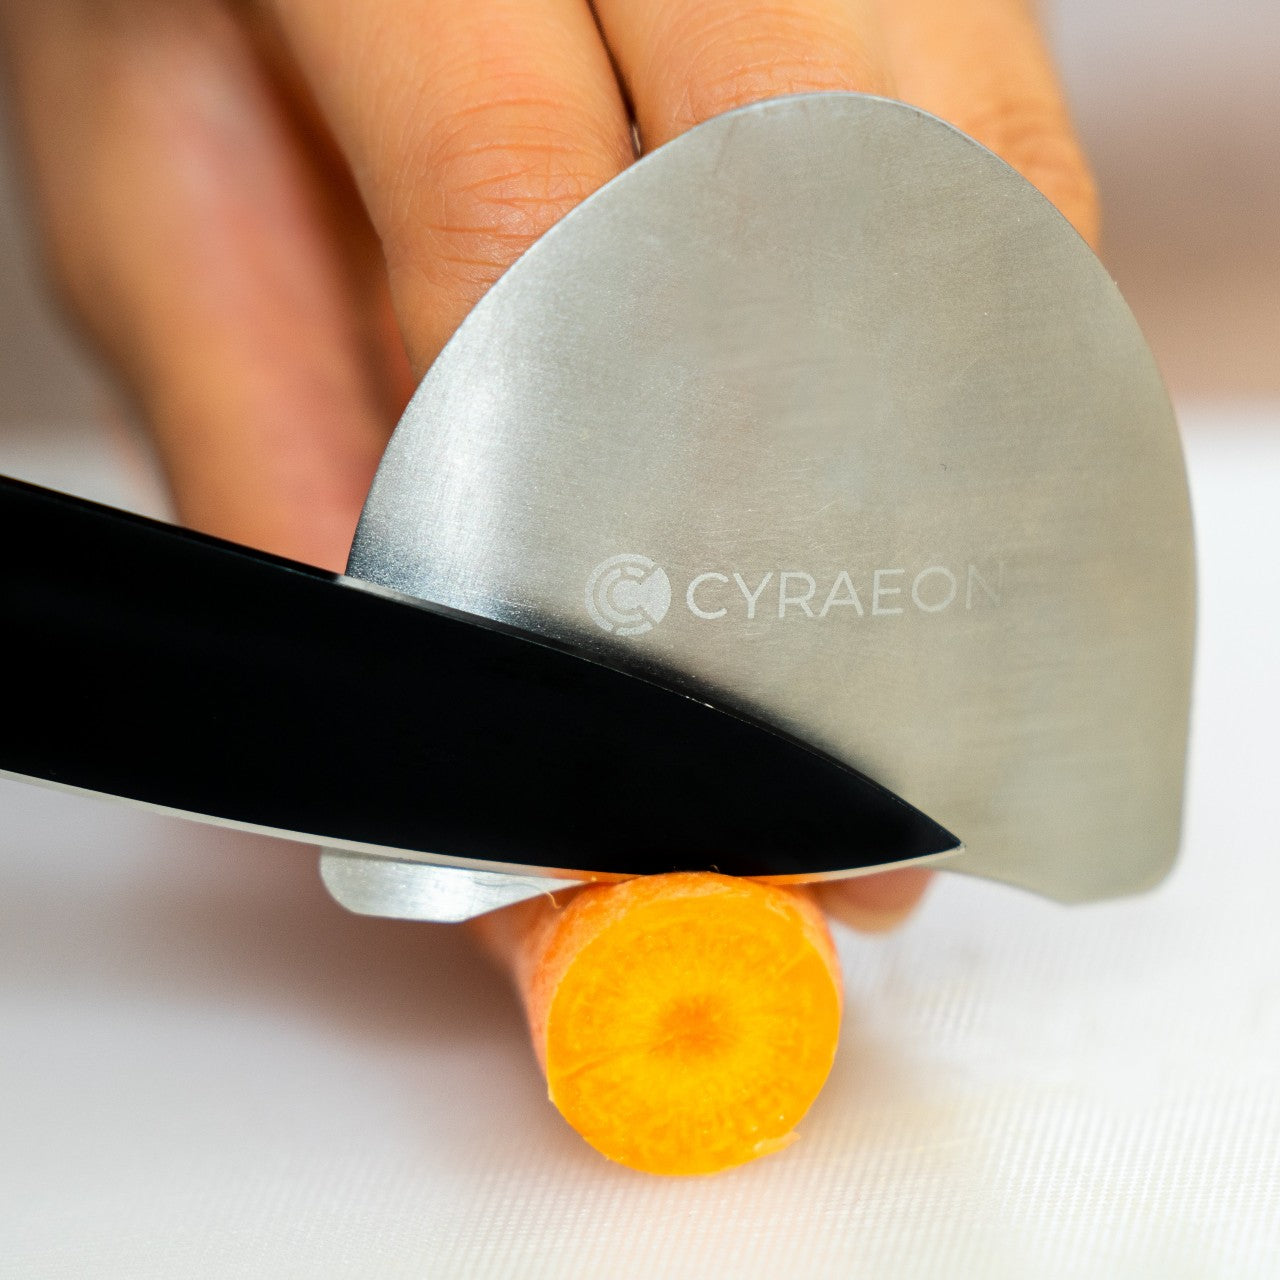 4 Pack Finger Guards For Safe To Slice Vegetables Fruit Stainless